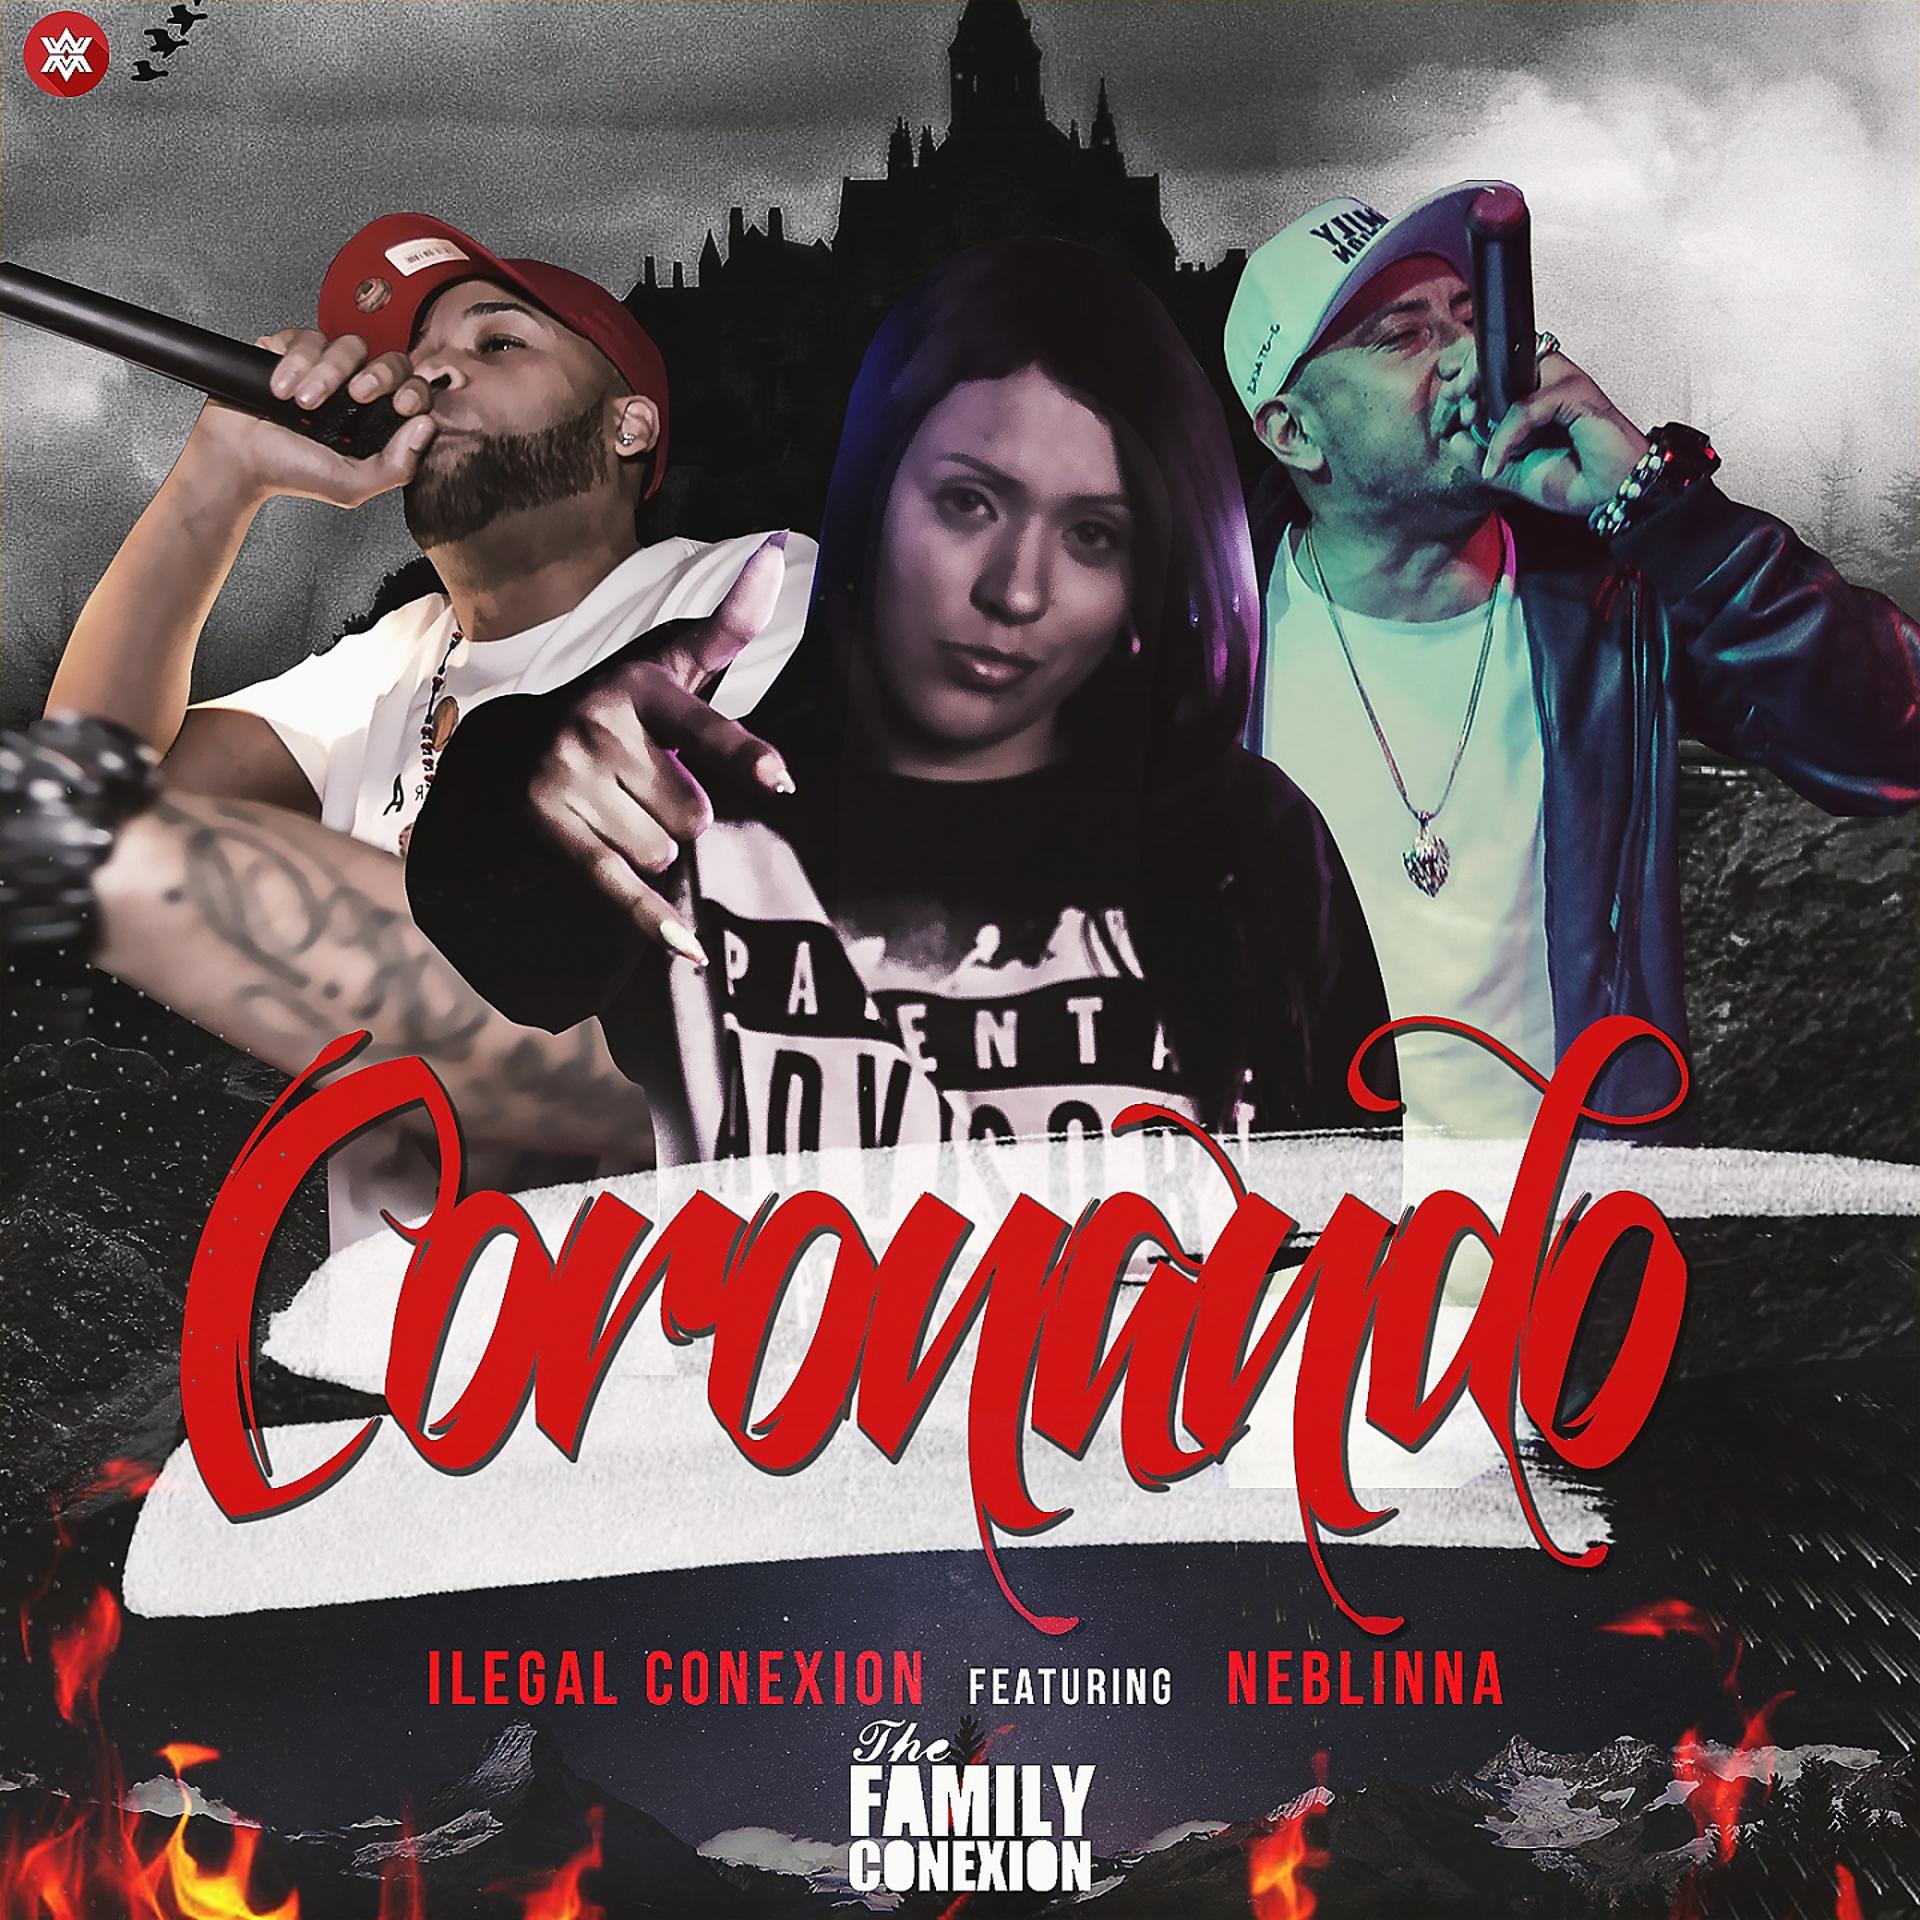 Постер альбома Coronando